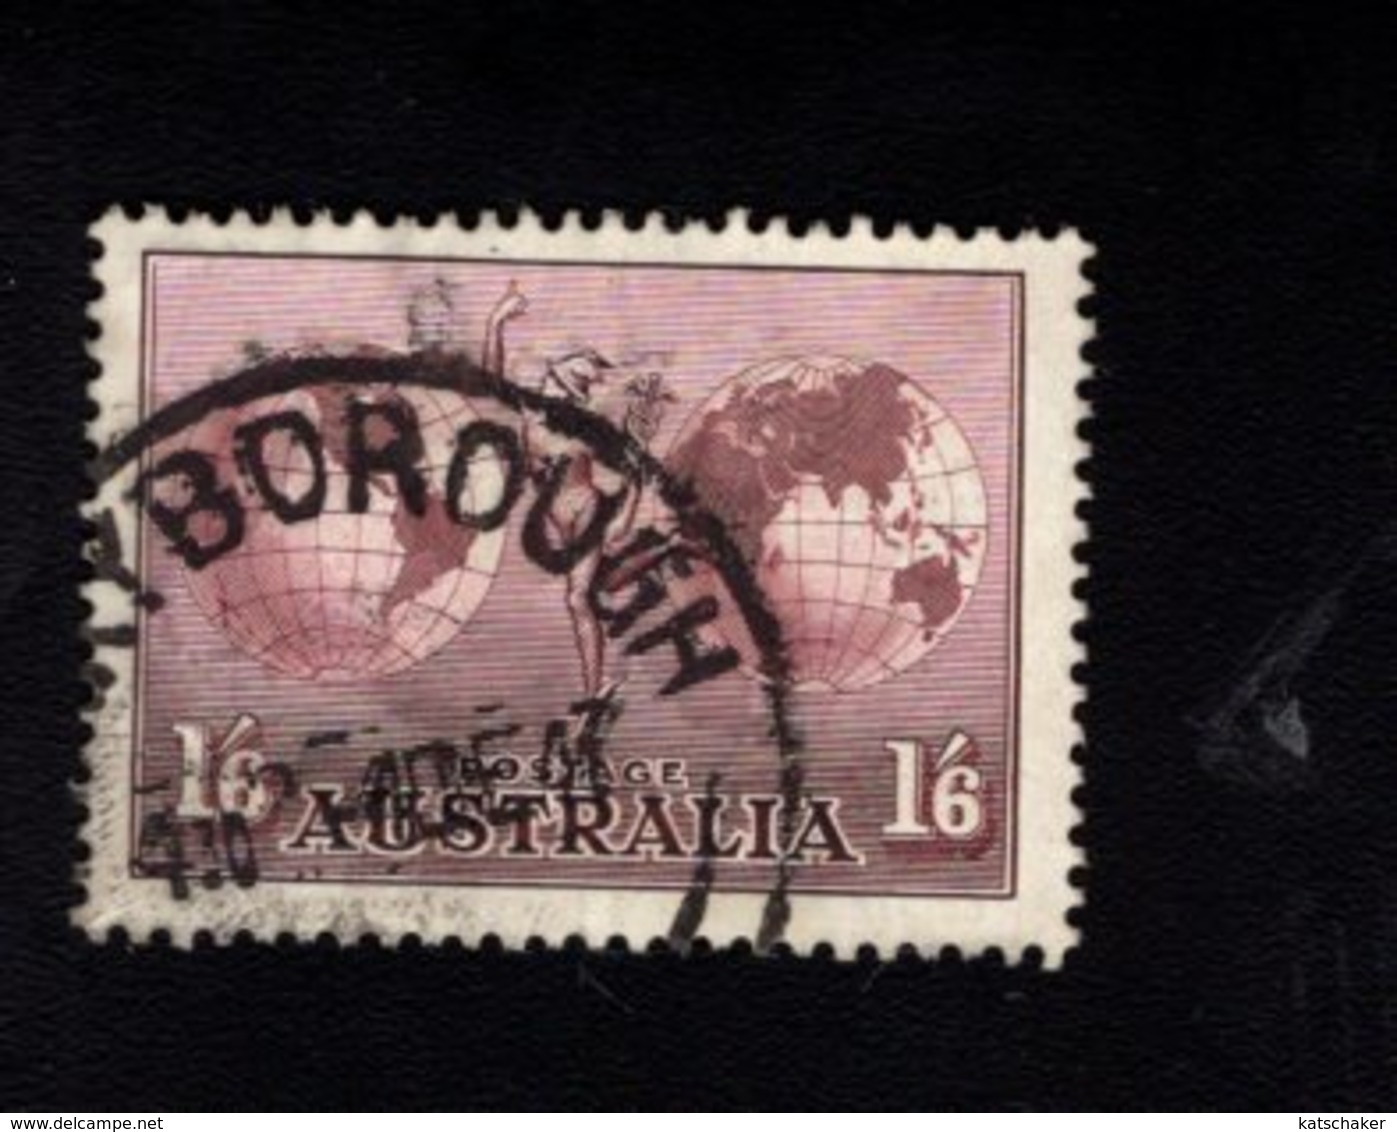 916392274 1937 SCOTT C5 GEBRUIKT USED GEBRAUCHT OBLITERE (O) MERCURY AND HEMISPHERES - Used Stamps